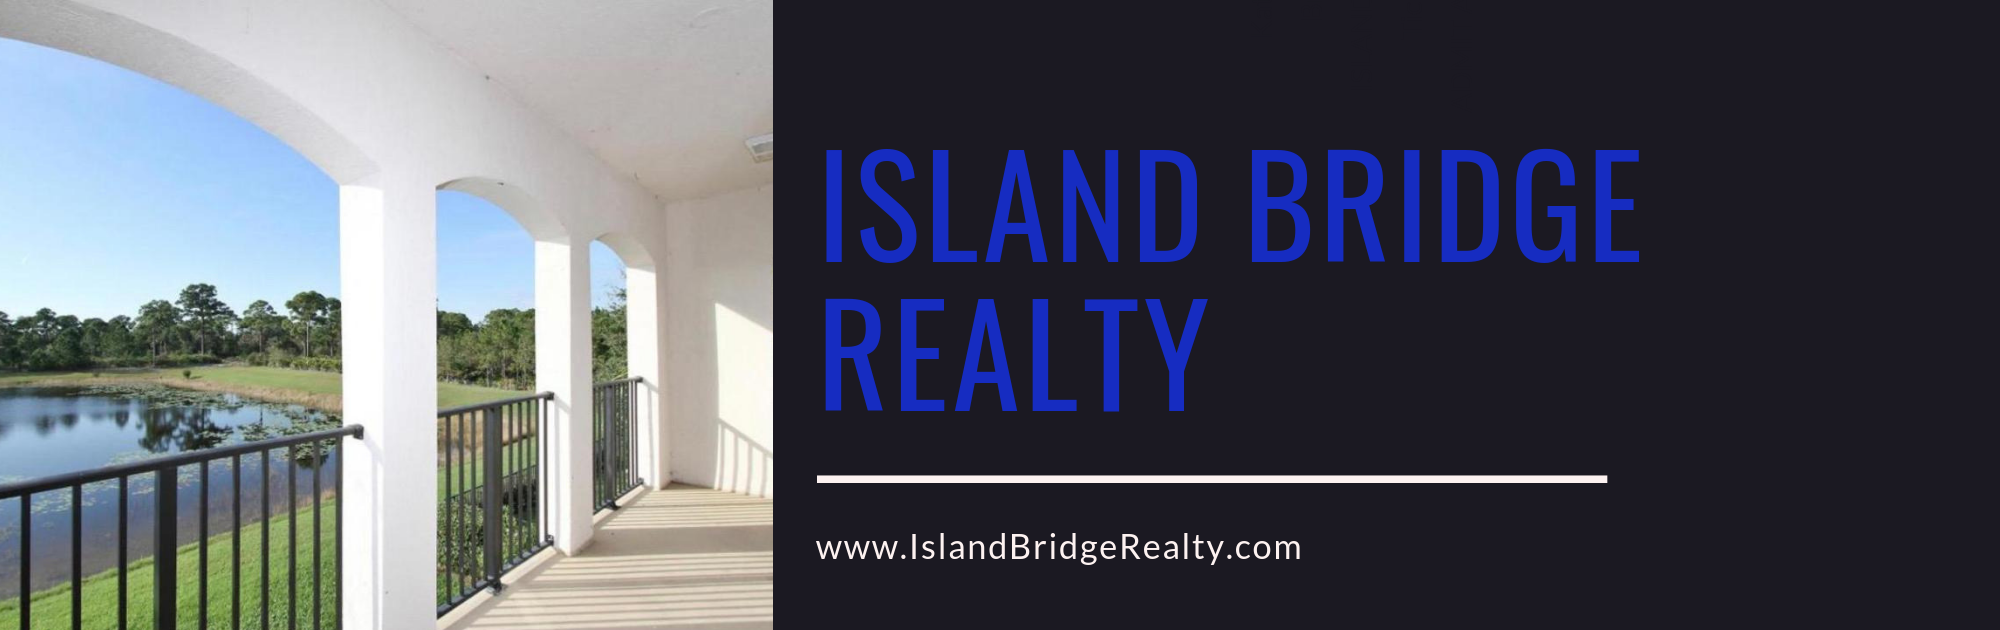 ISLAND BRIDGE REALTY